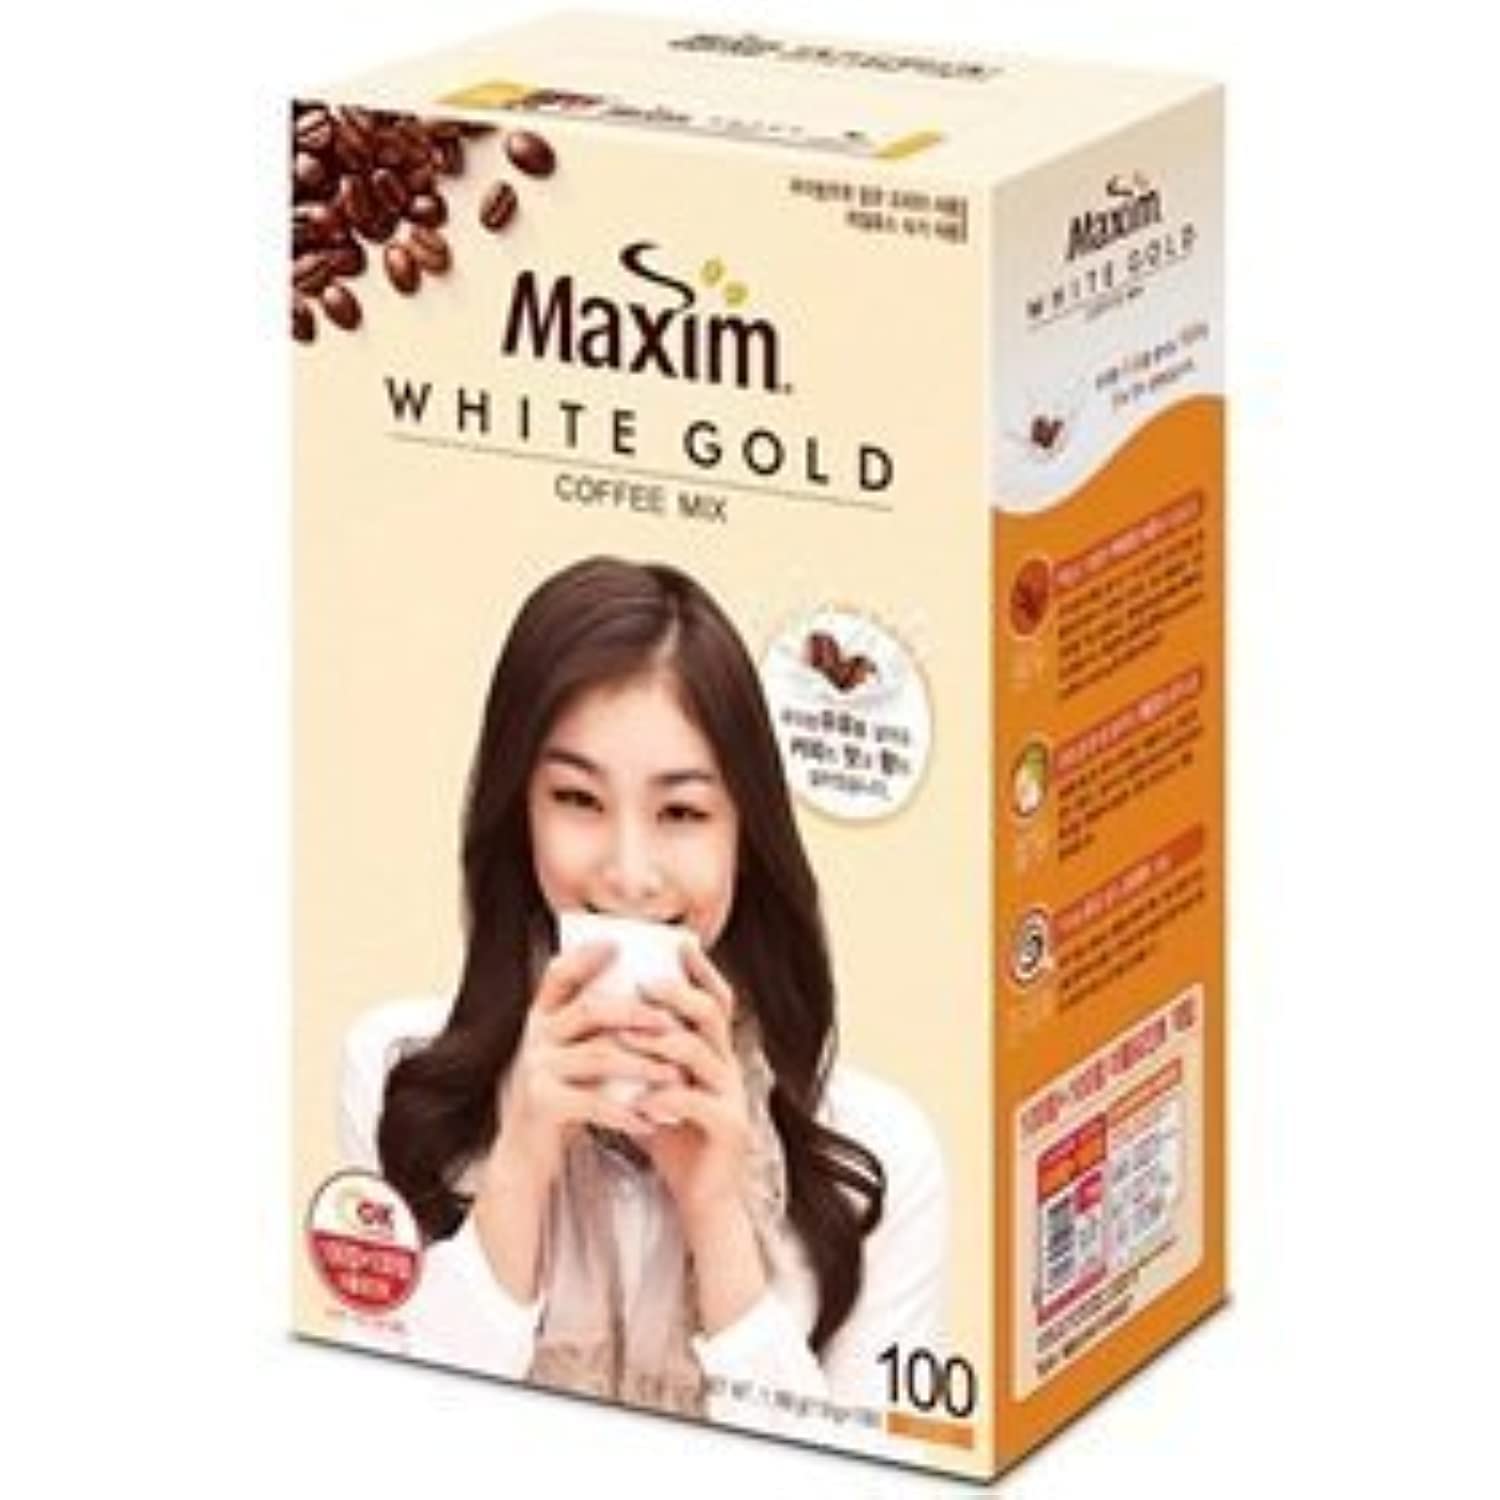 Kim Jonah CF of coffee / Korea coffee [MAXIM coffee] White Gold coffee mix 100 pieces